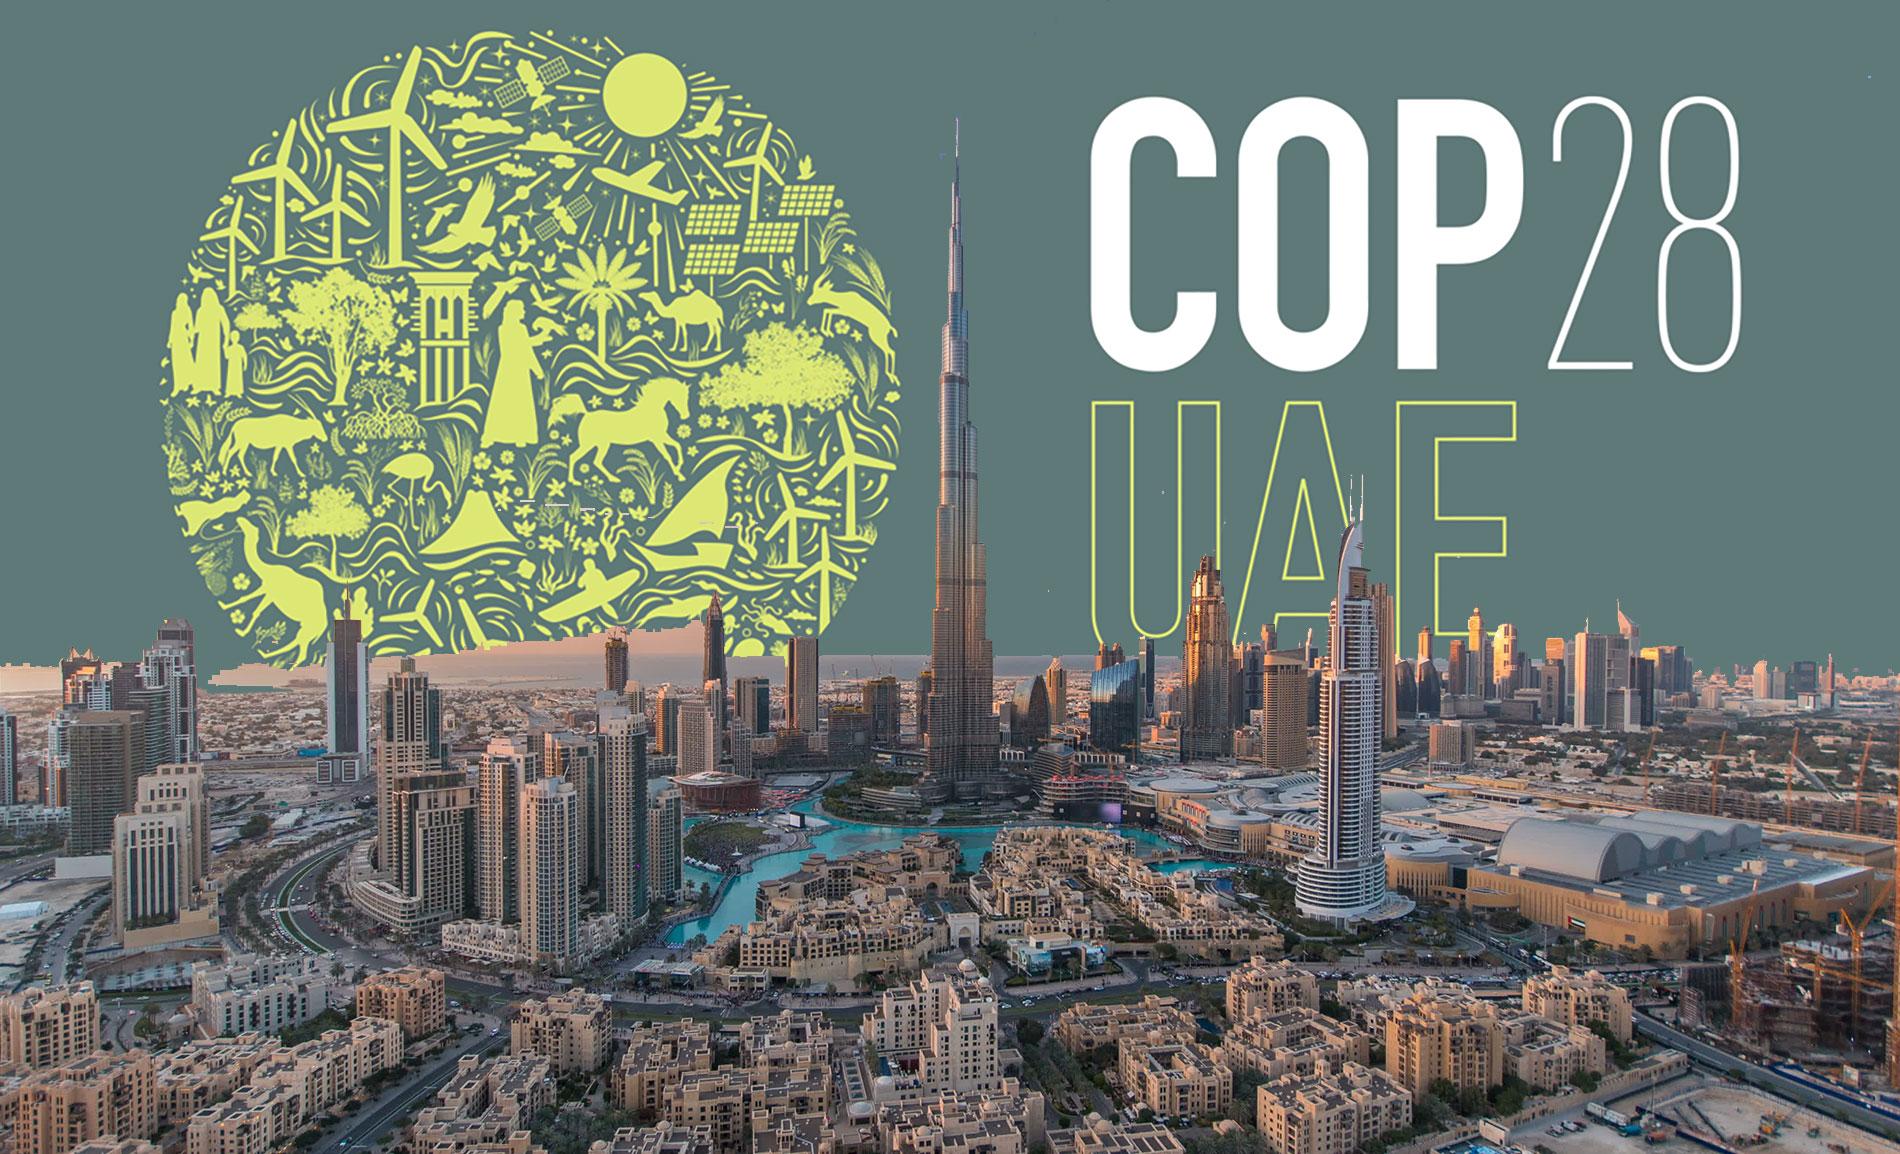 Dubai skyline with COP28 logo behind it.